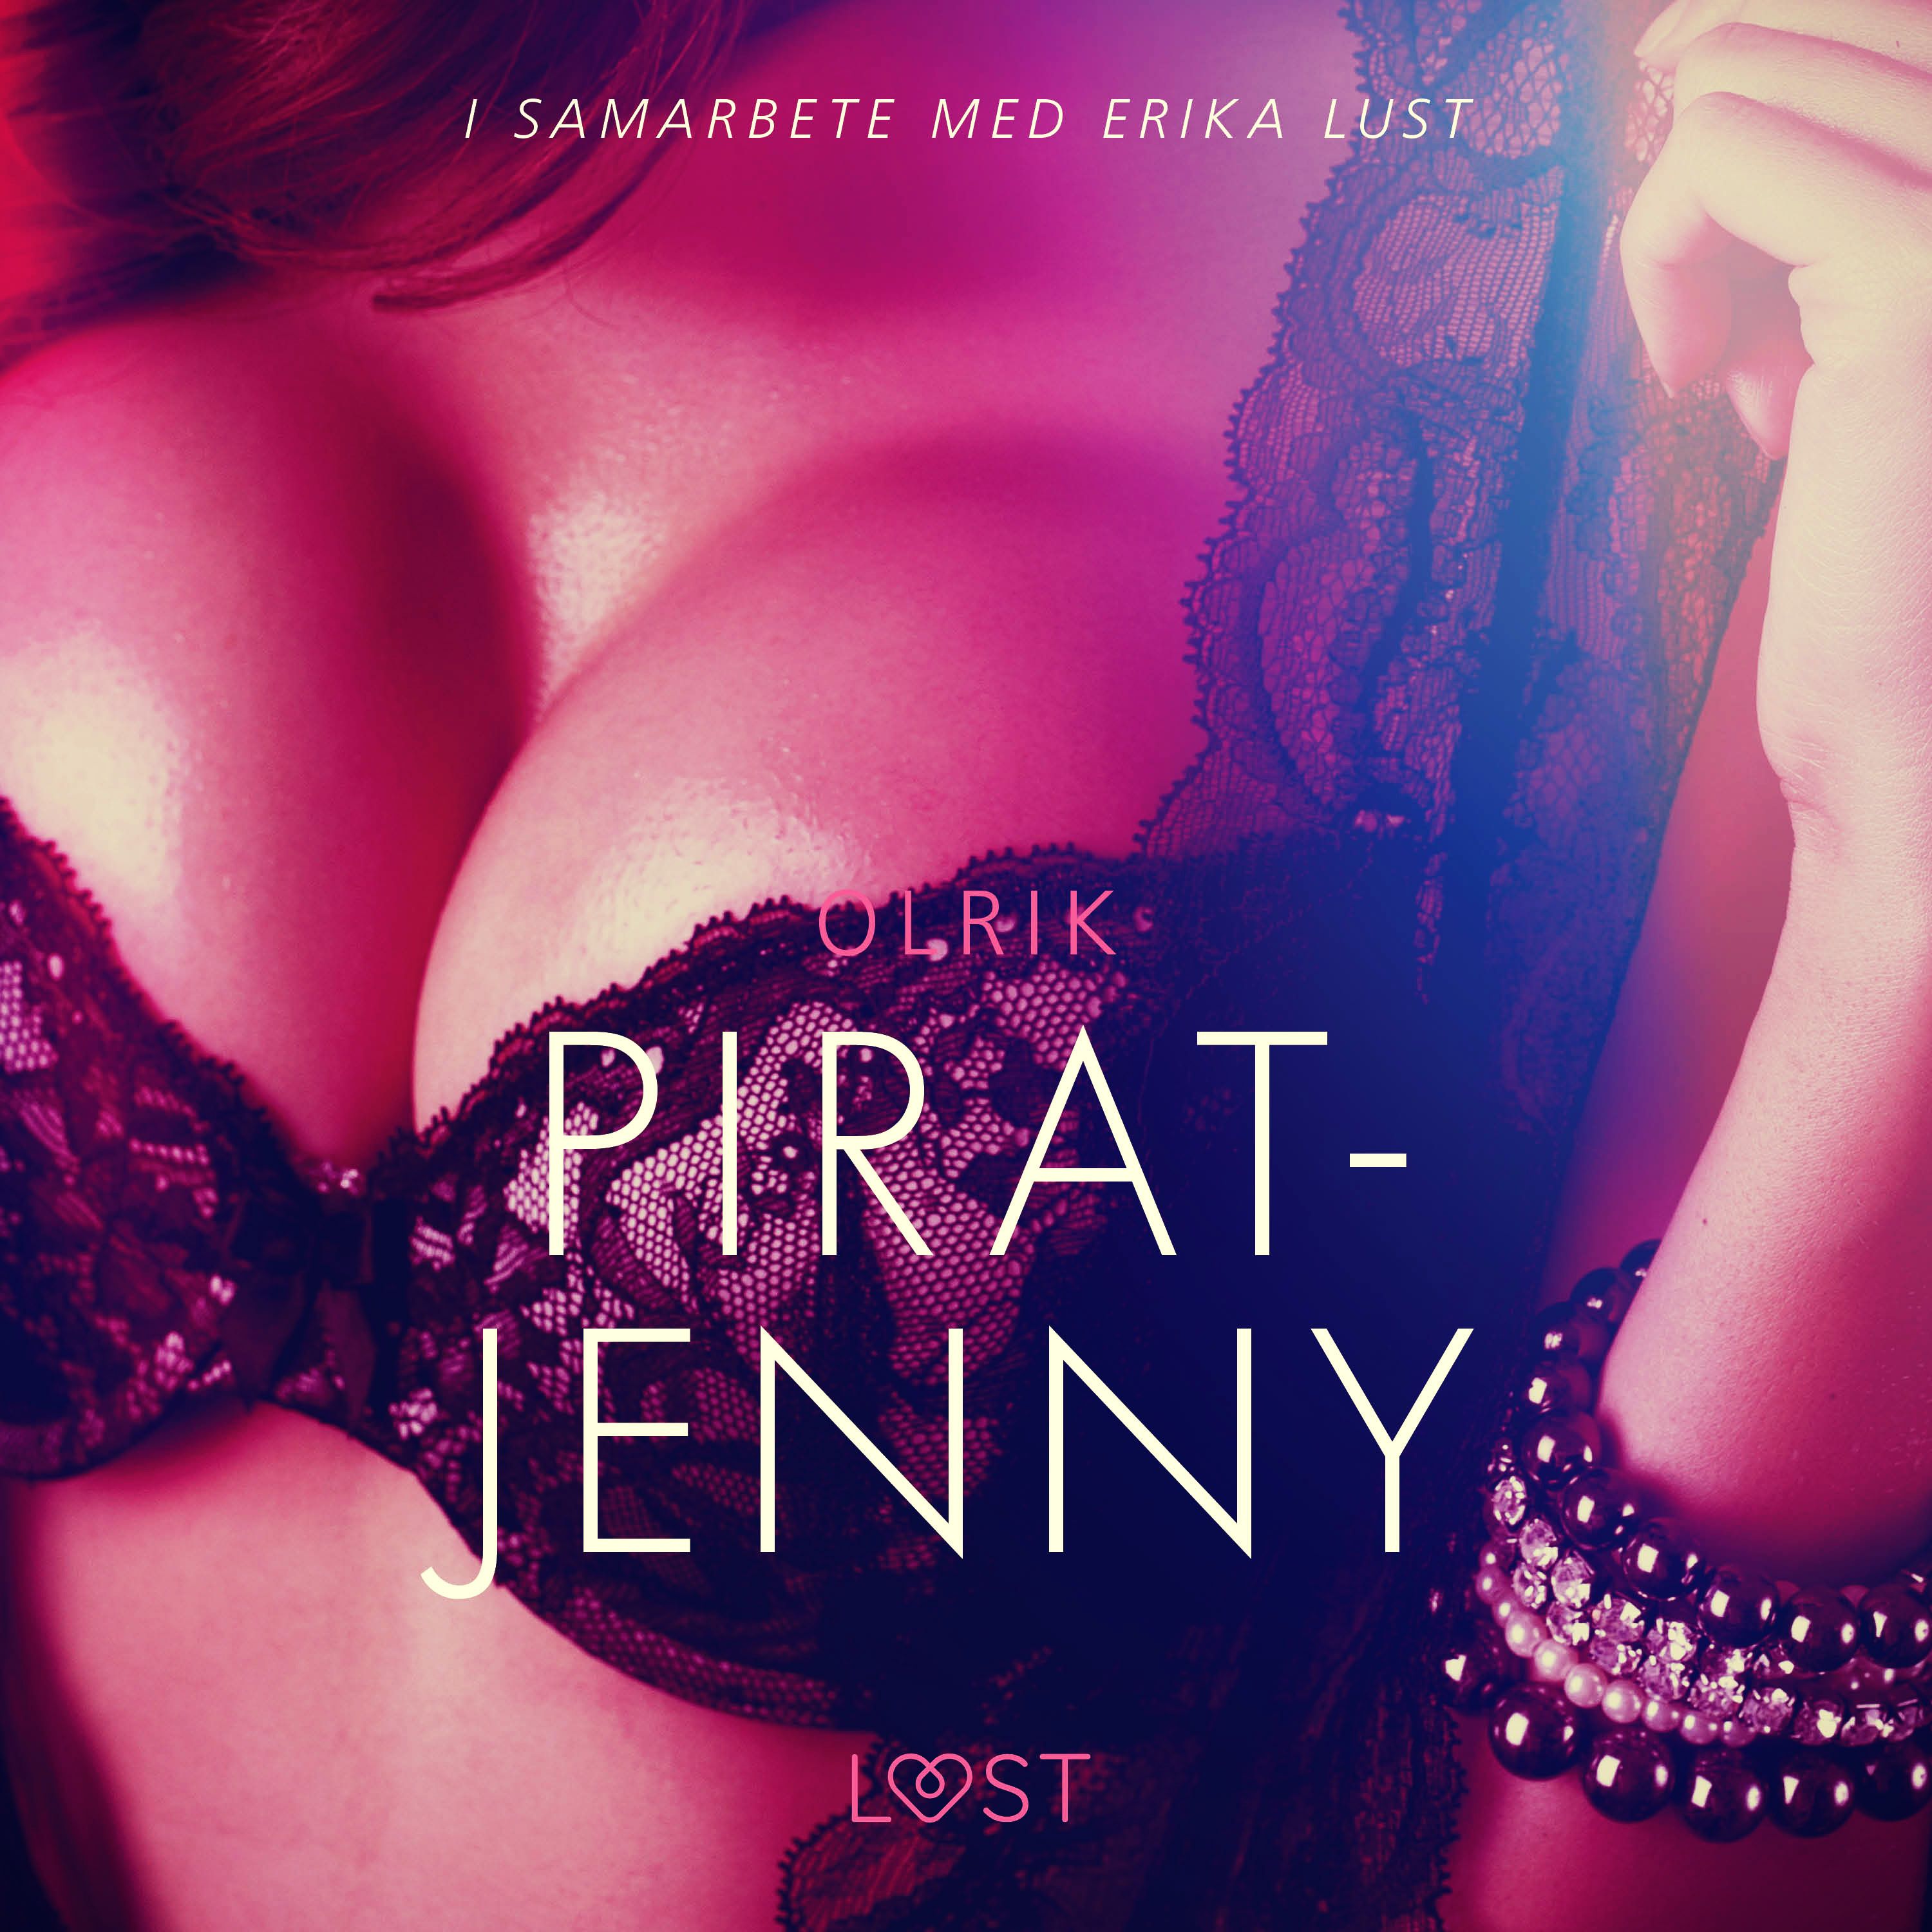 Pirat-Jenny - erotisk novell, ljudbok av Olrik